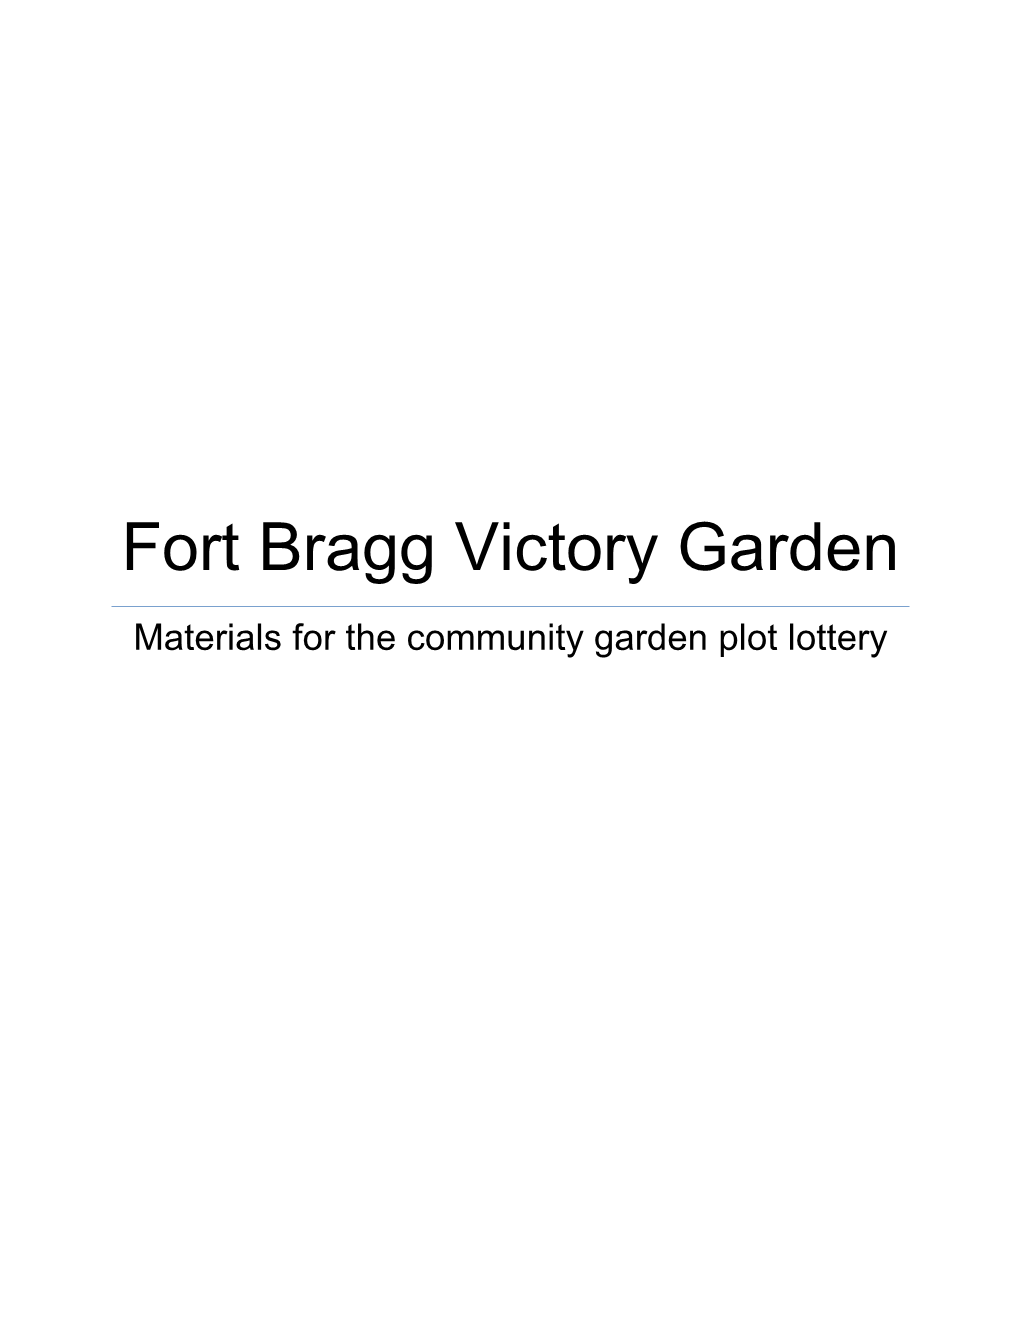 Fort Bragg Victory Garden Materials for the Community Garden Plot Lottery